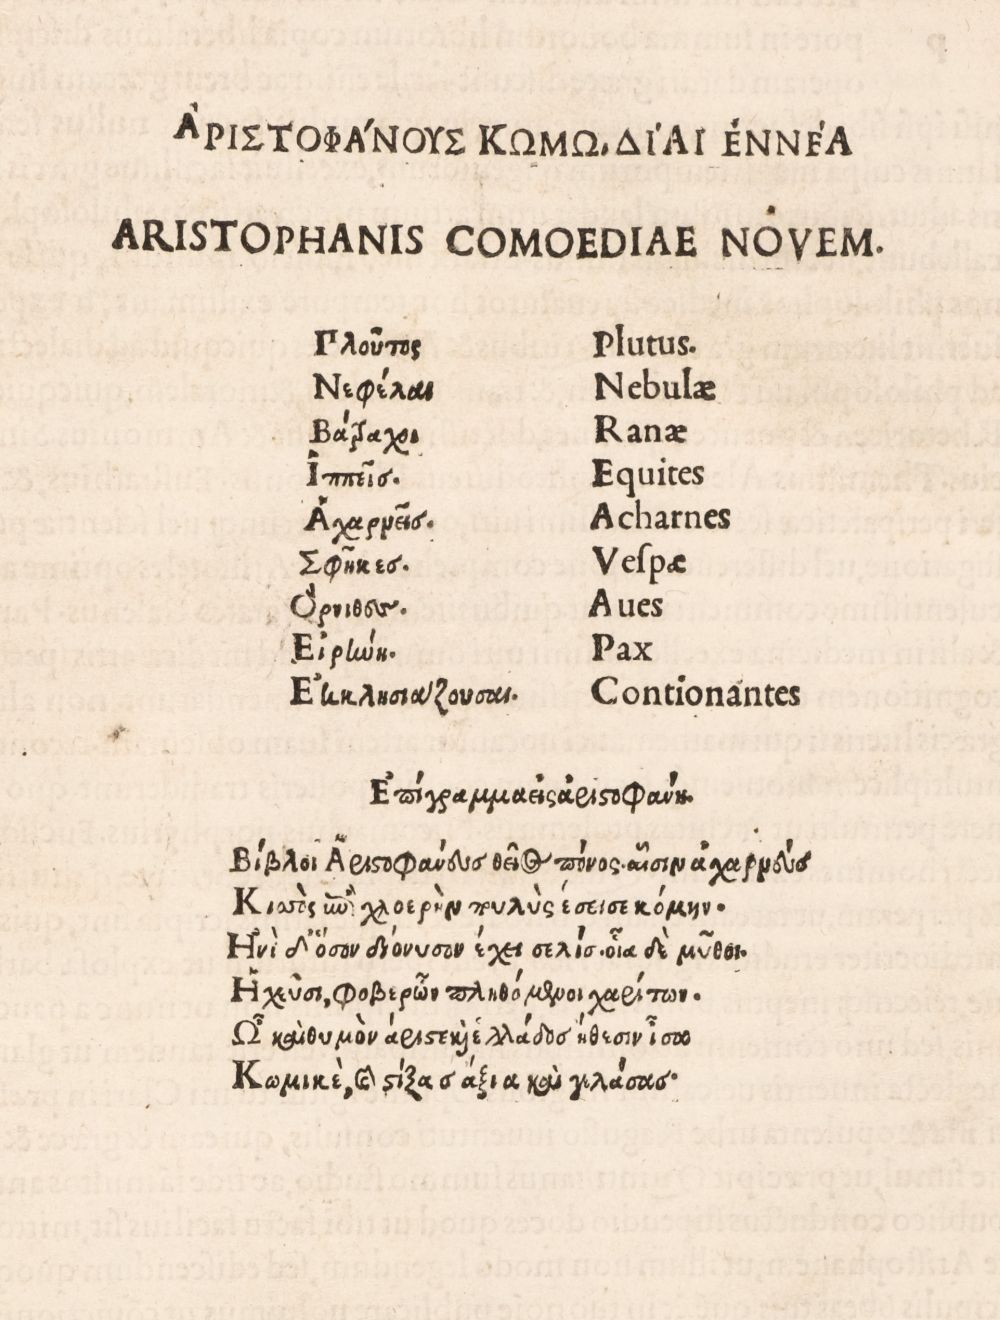 Aristophanes. Comoediae Novem, Venice, Apud Aldum, 1498 - Image 3 of 3